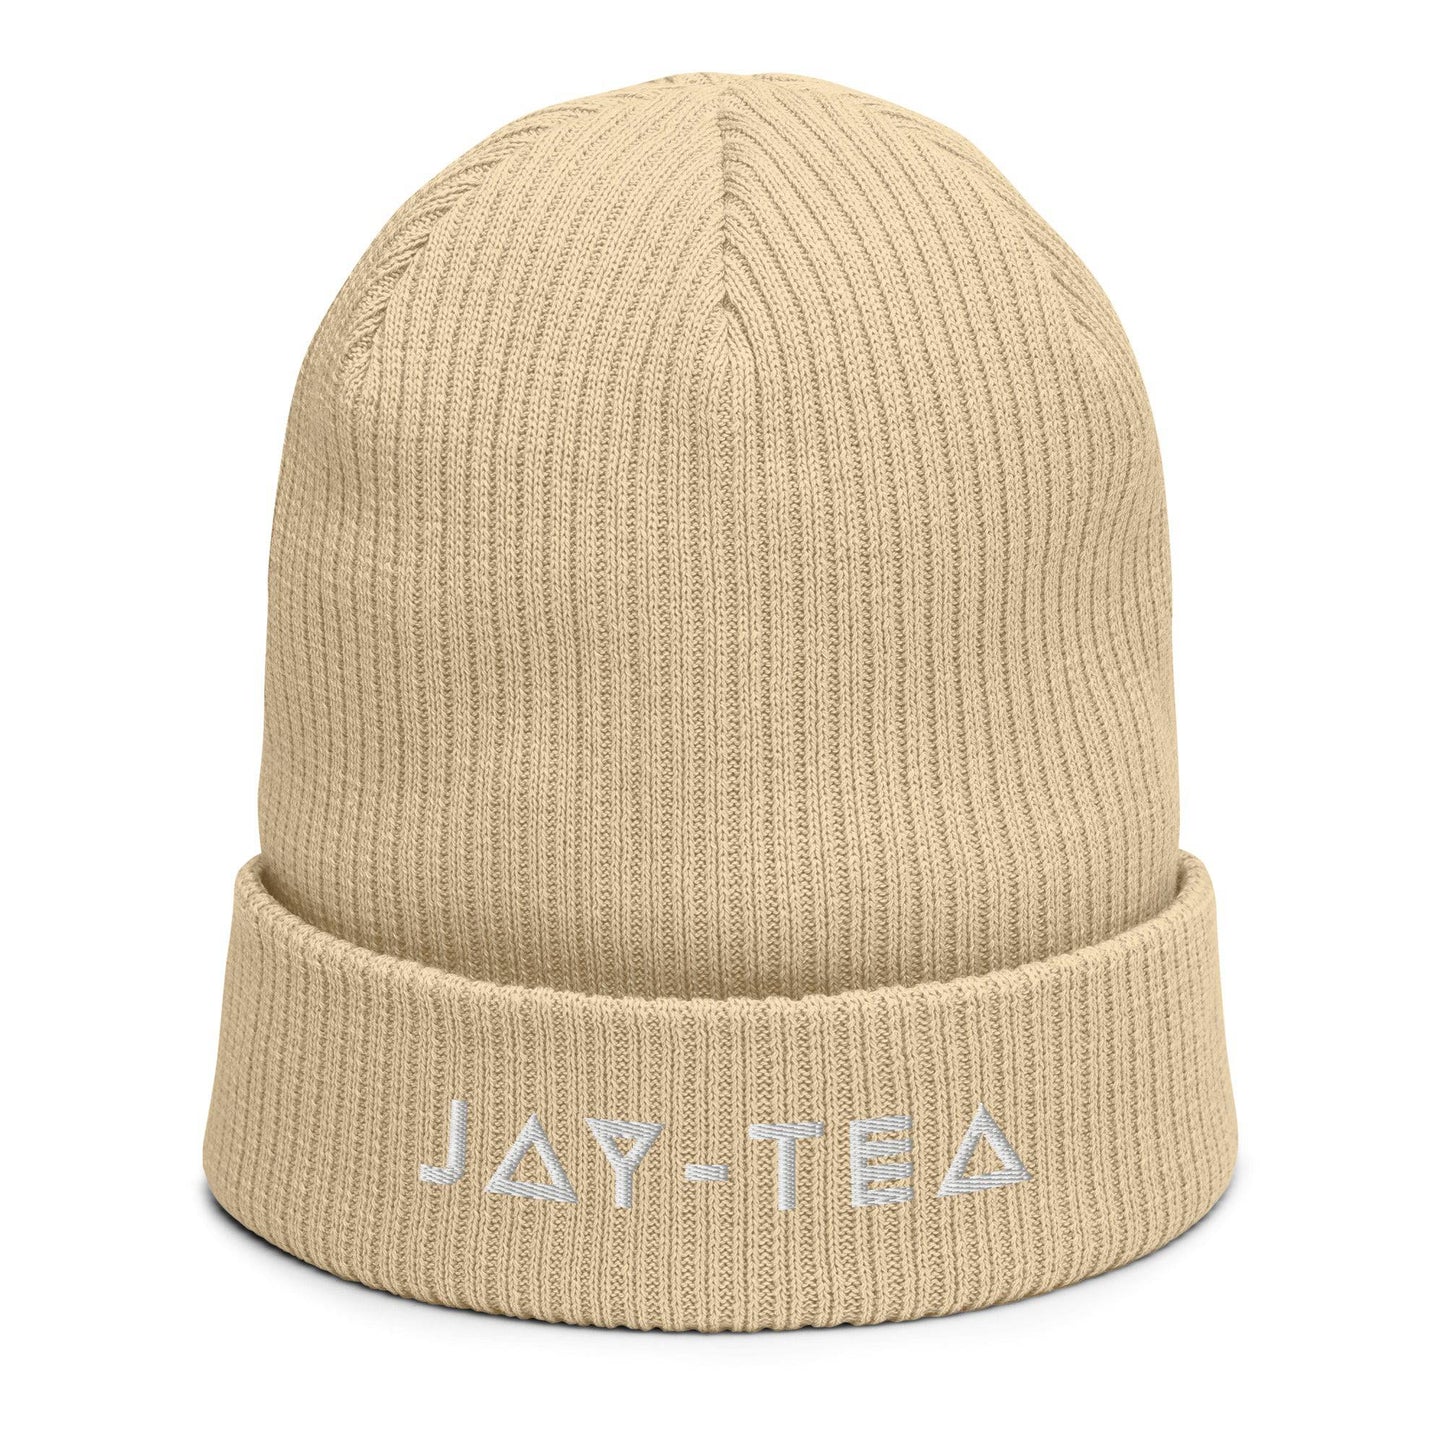 Gerippte Mütze | Jay-Tea Originals - Jay-Tea - Jay-Tea